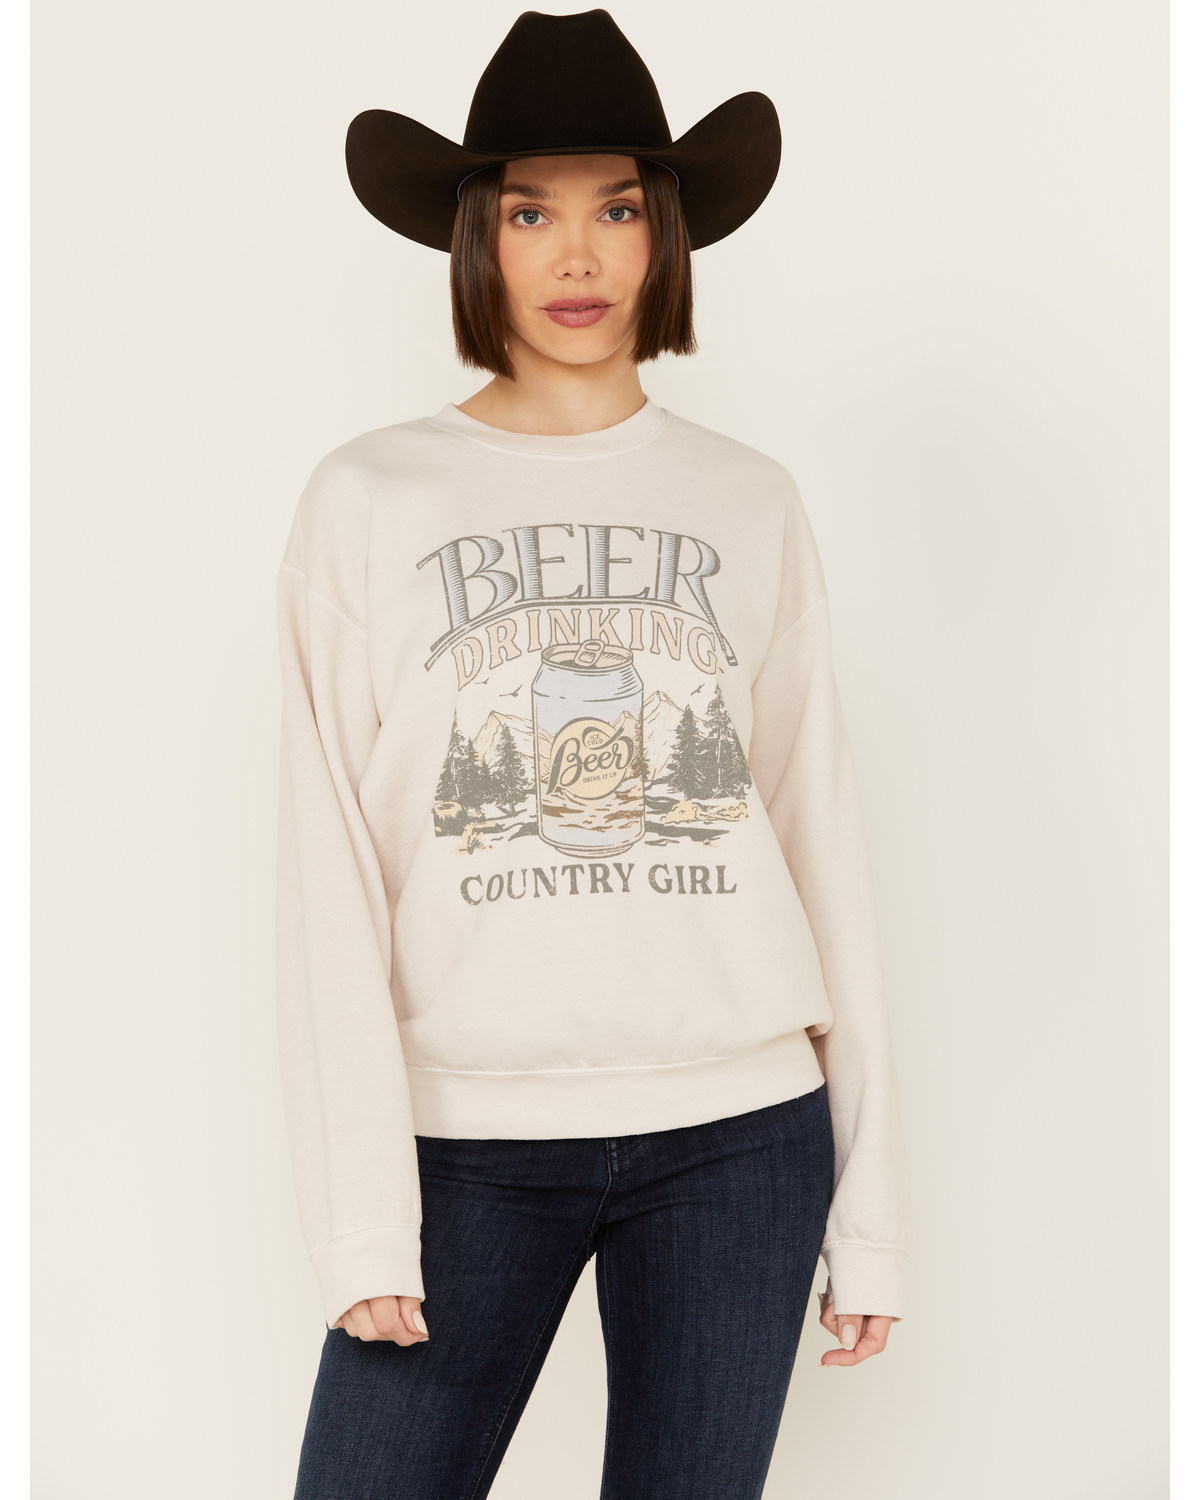 Youth Revolt Women's Beer Drinking Sweatshirt